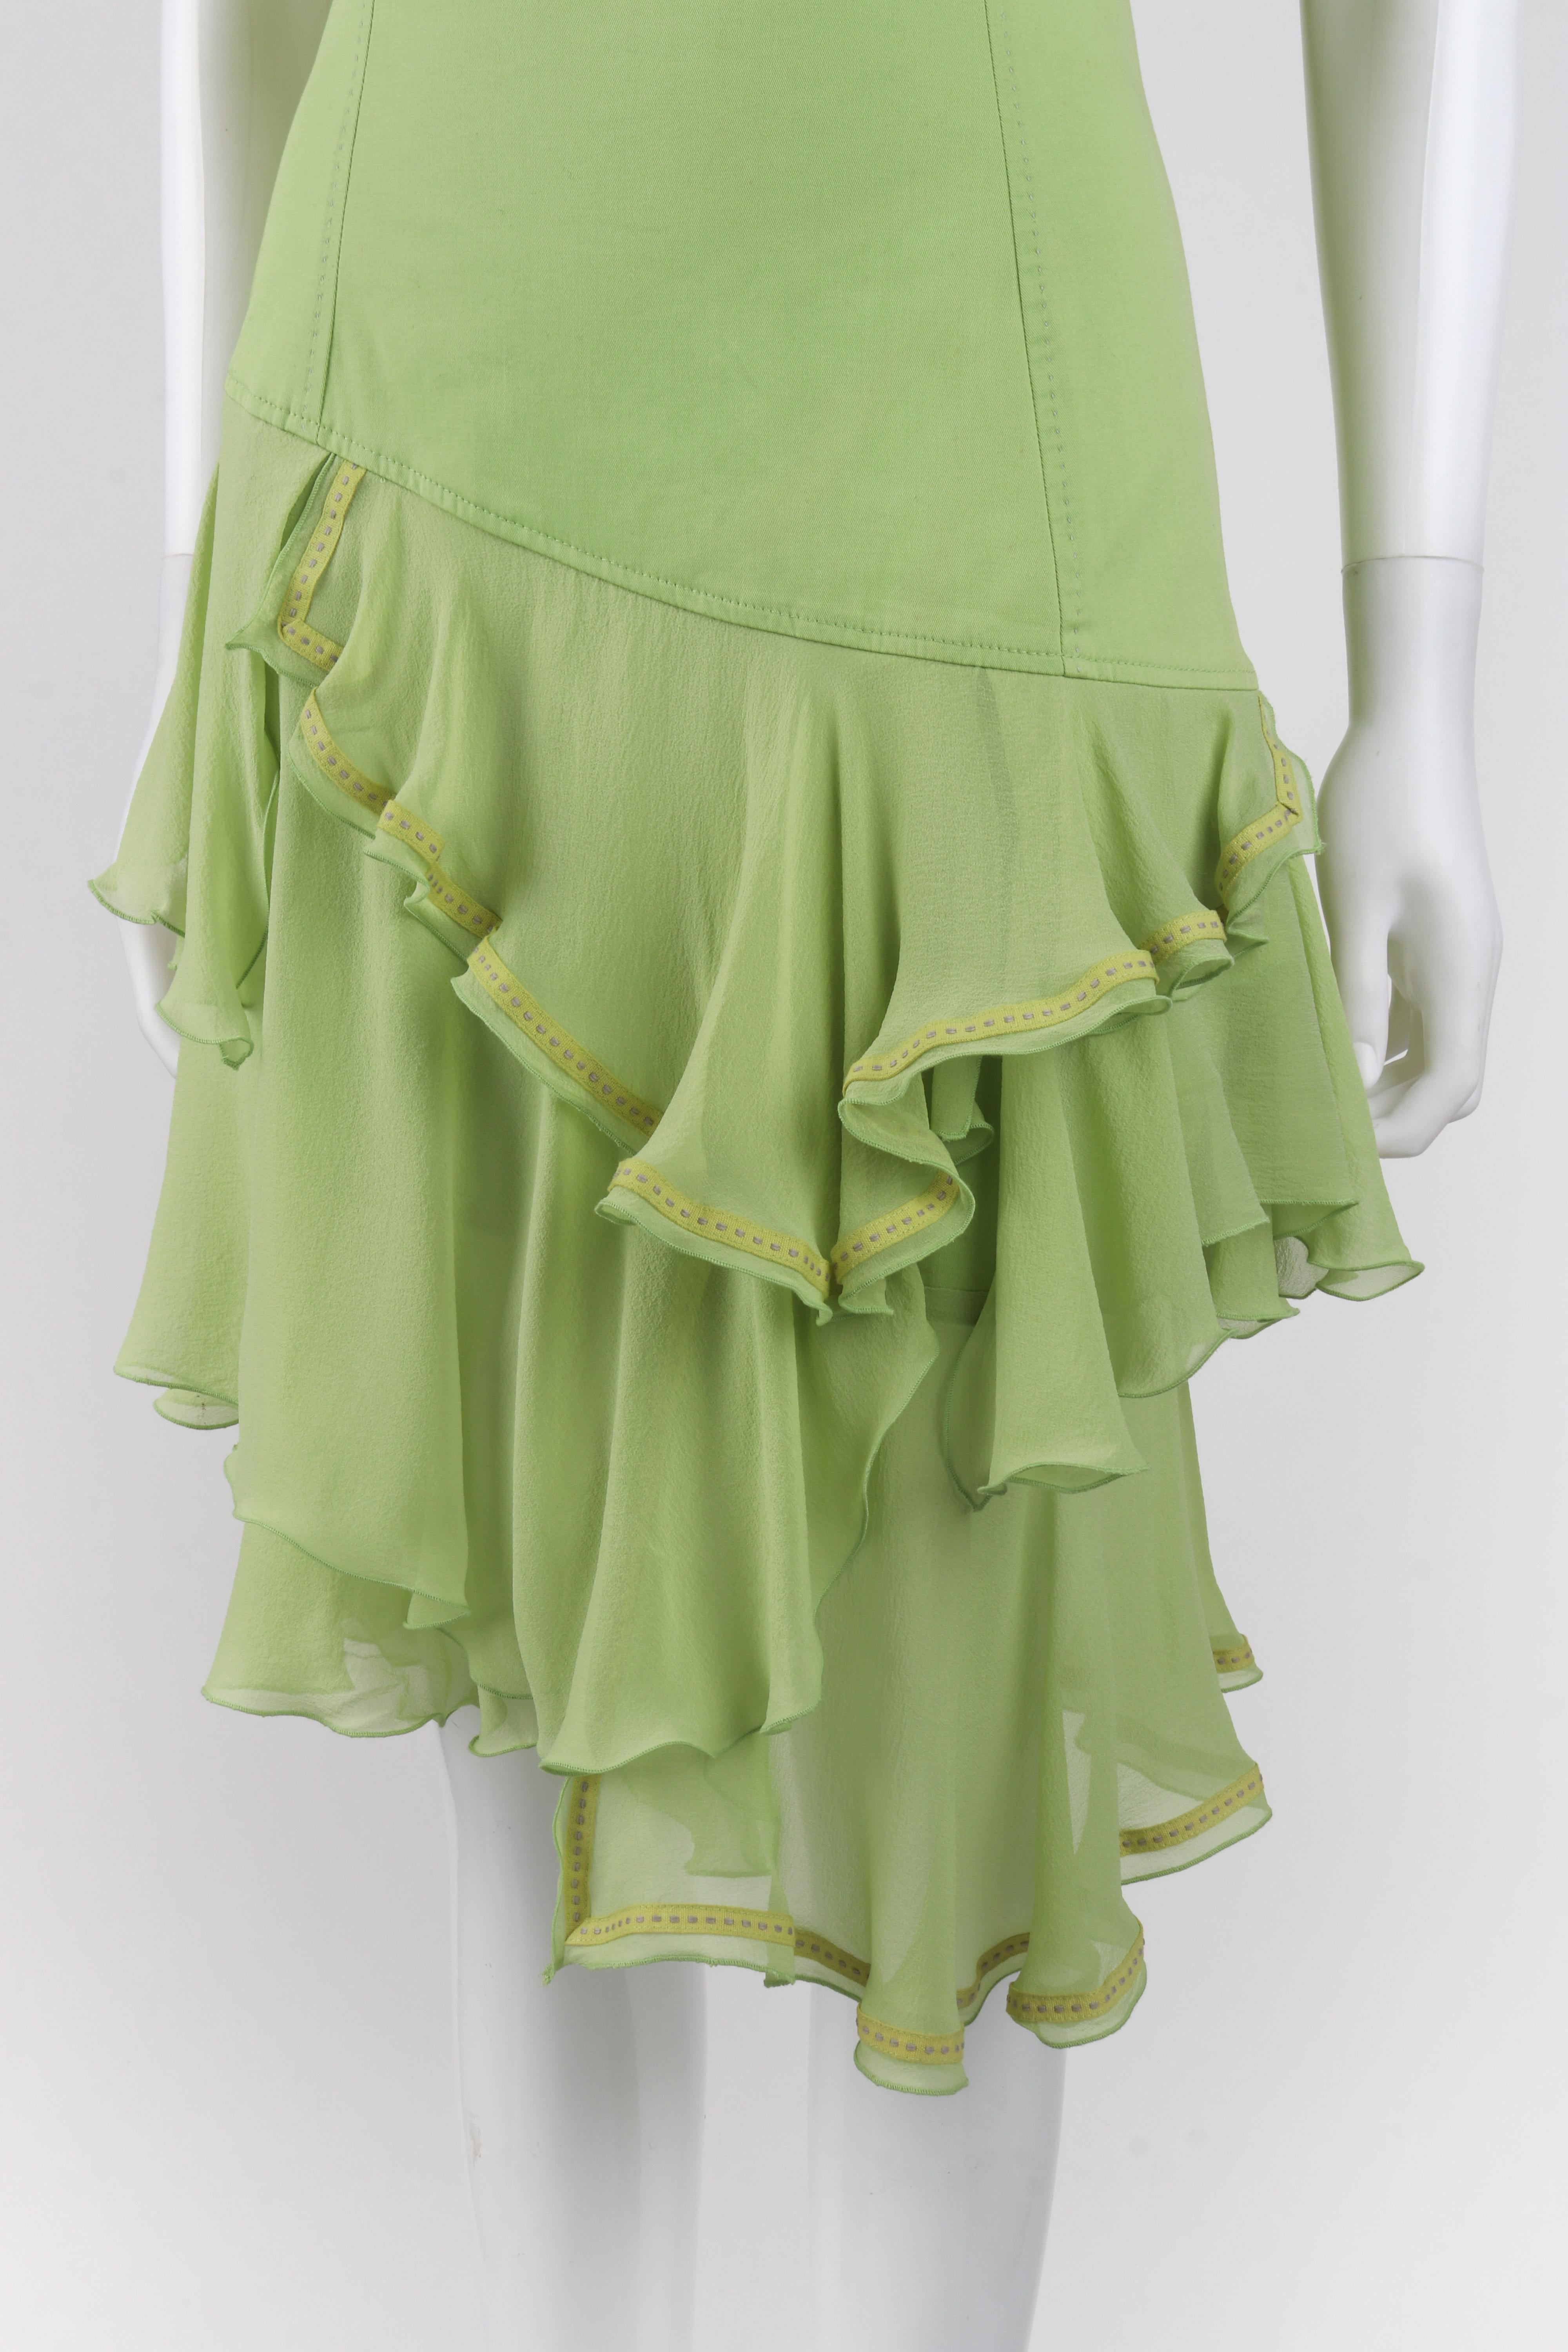 Women's ALEXANDER McQUEEN S/S 1996 “The Hunger” Green Asymmetric Strapless Ruffle Dress For Sale